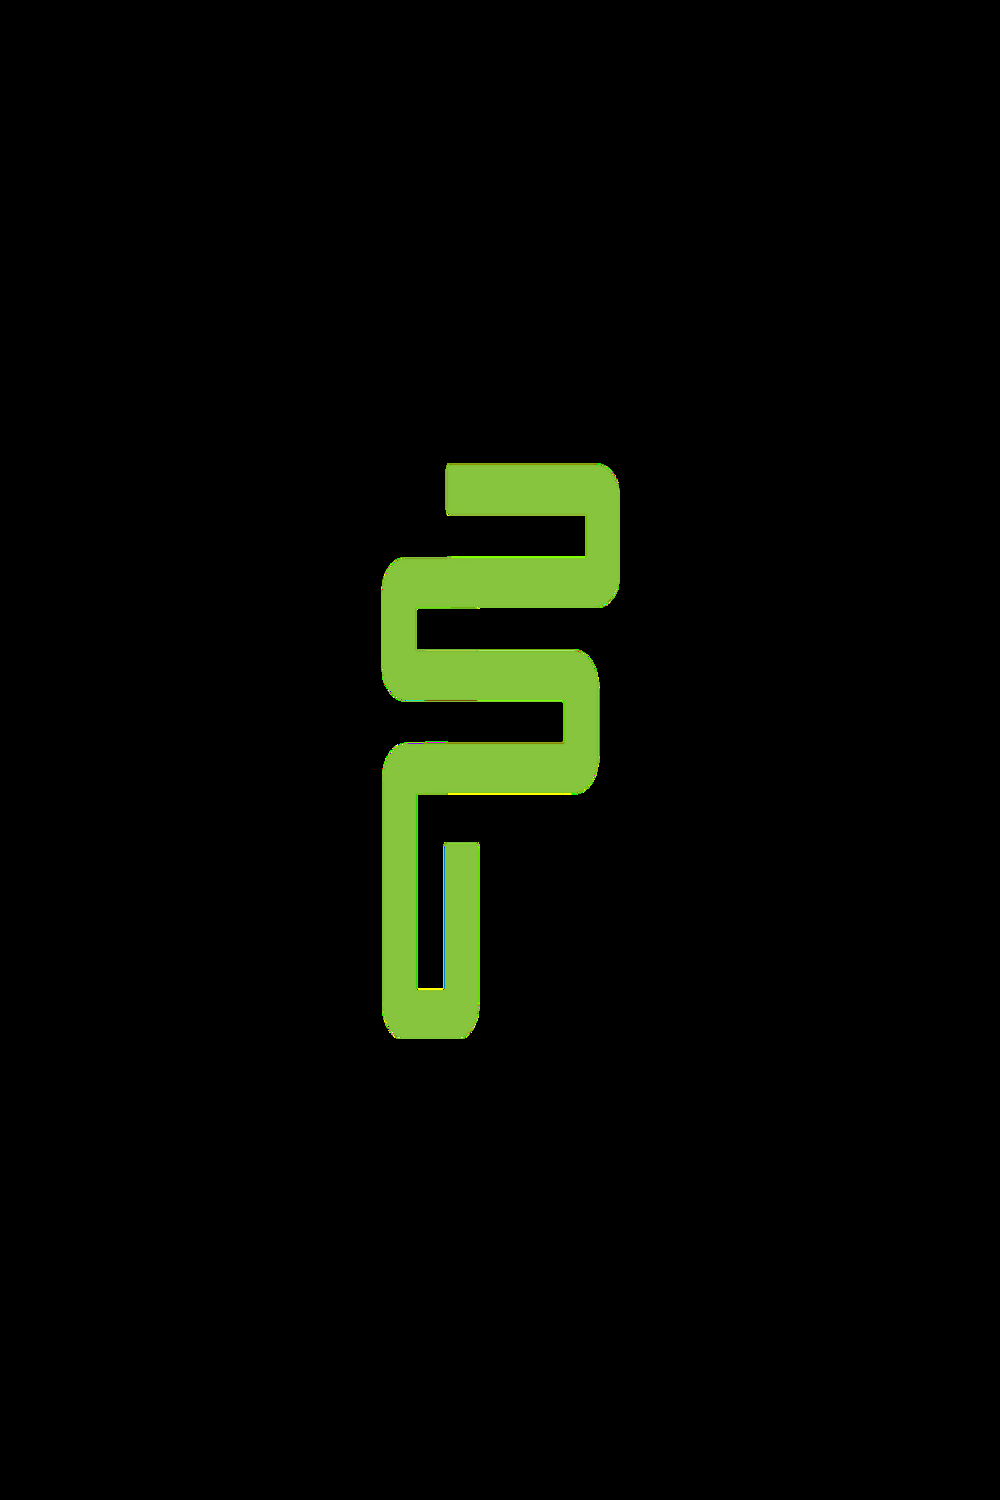 F letter logo design your brand pinterest preview image.